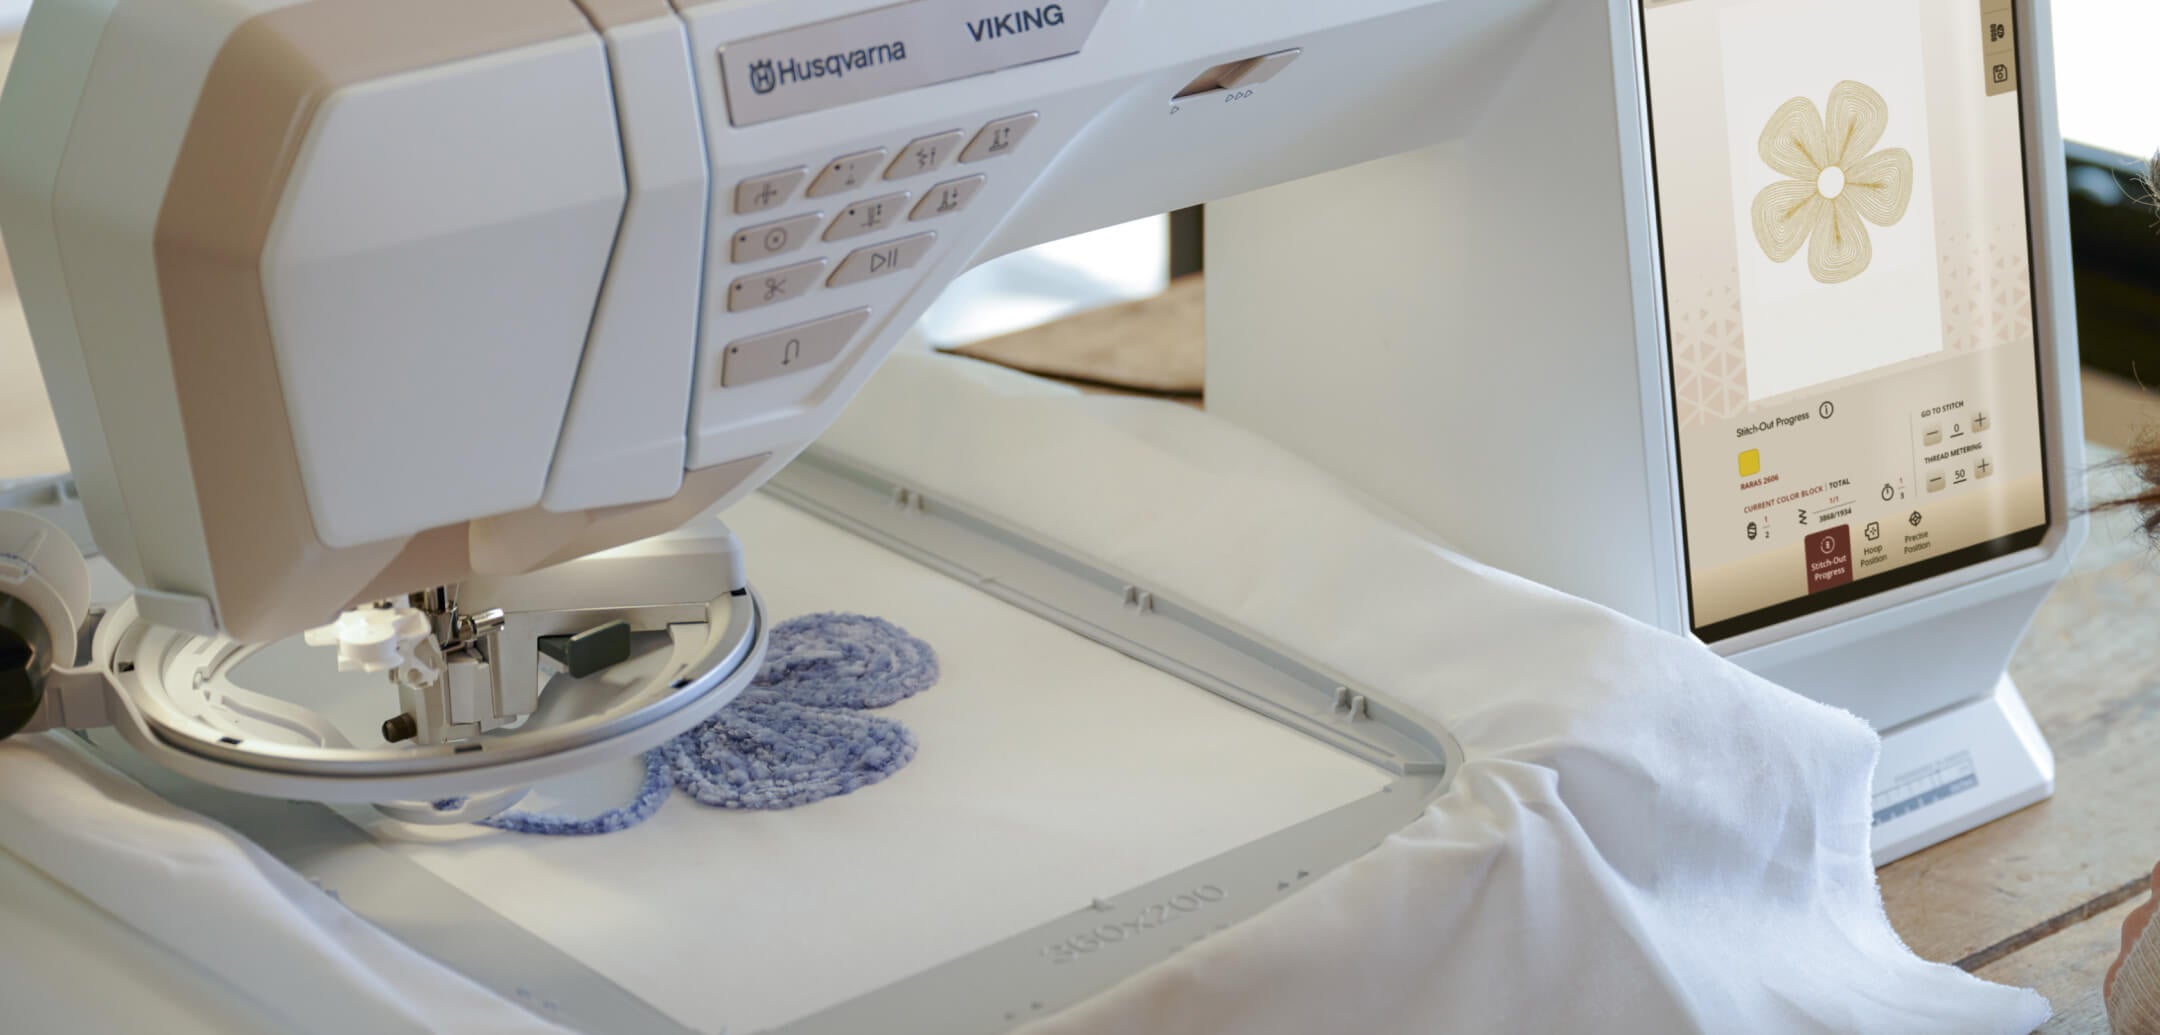 HUSQVARNA VIKING Sewing & Embroidery Machines | Husqvarna® Viking®